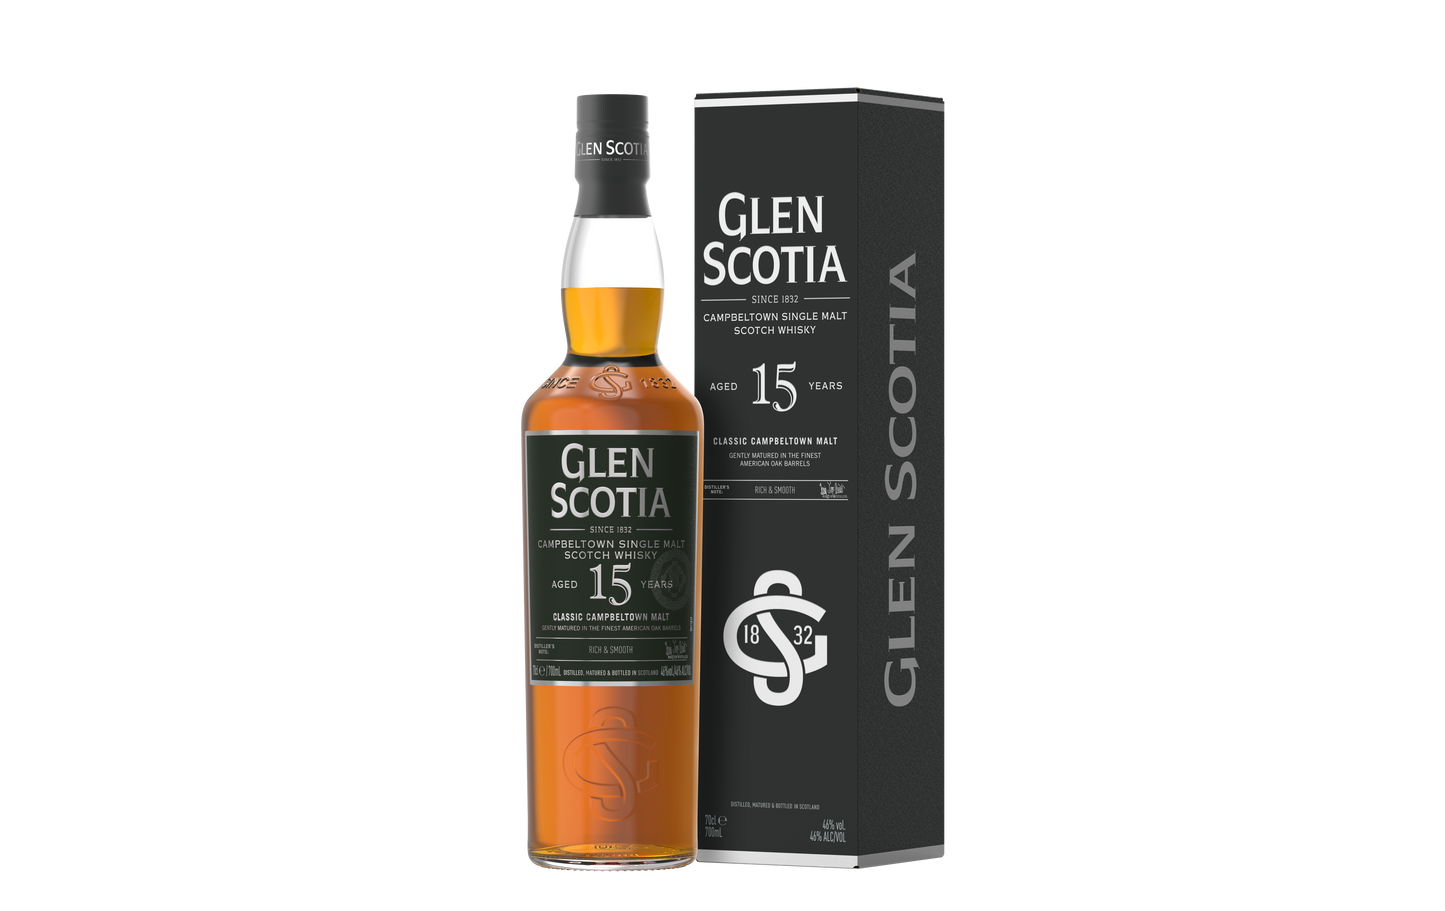 Glen Scotia 15 Year Old Scottish Whisky